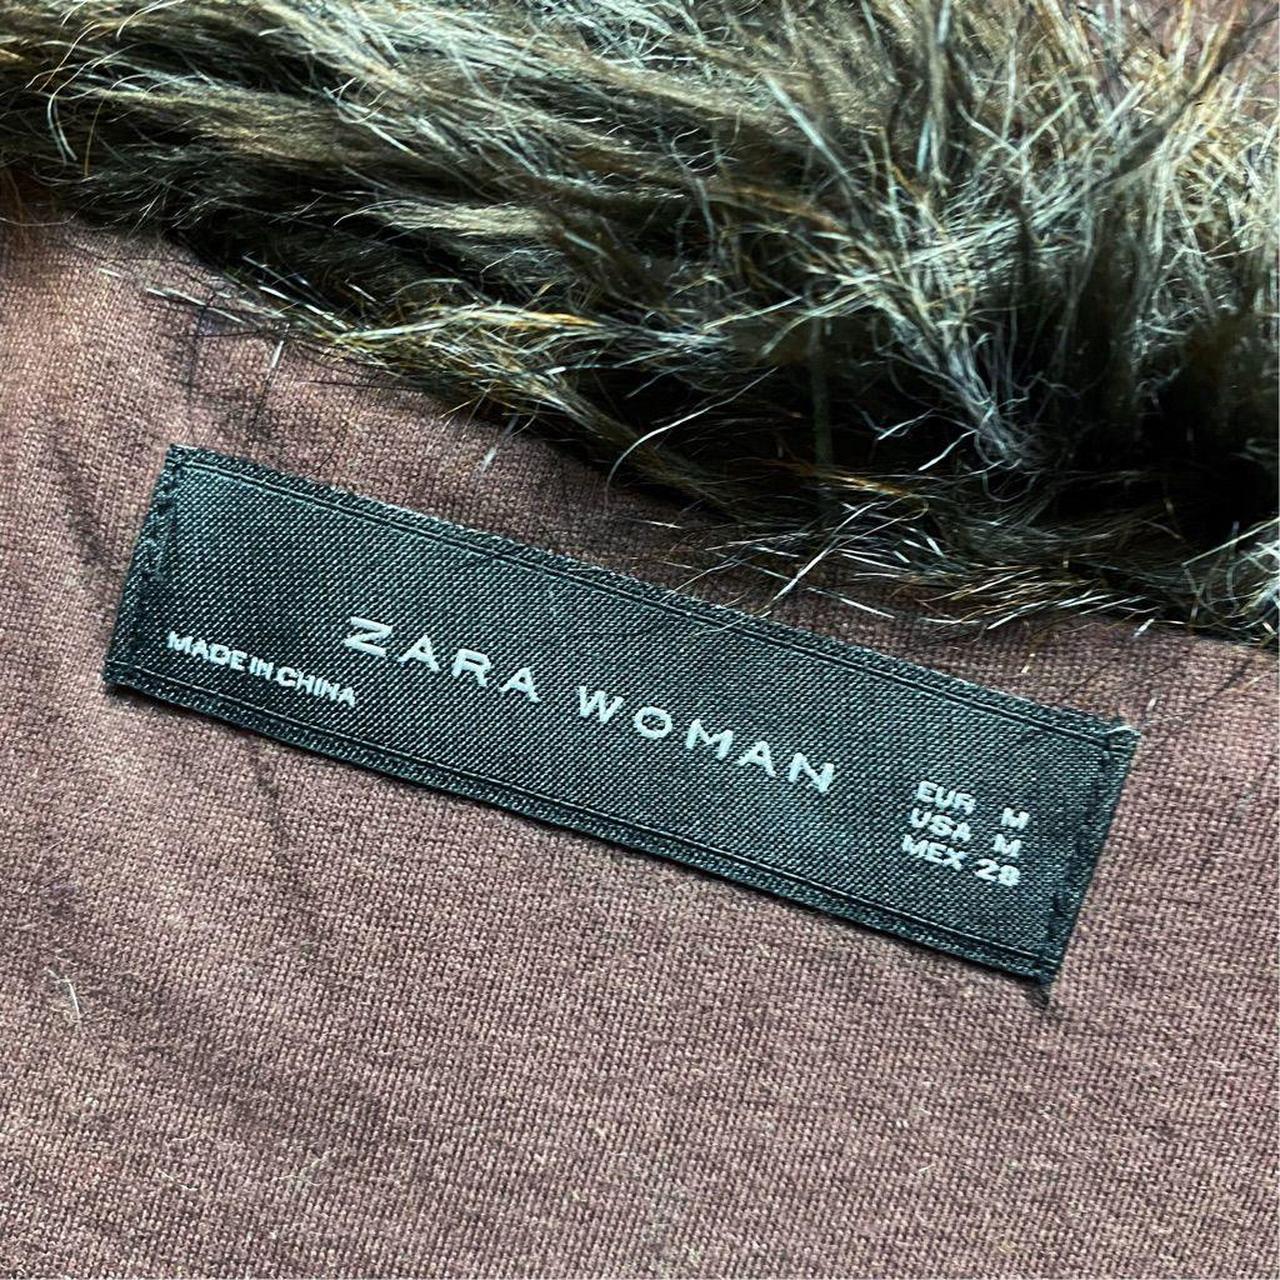 Zara Women's Black and Brown Gilet (4)